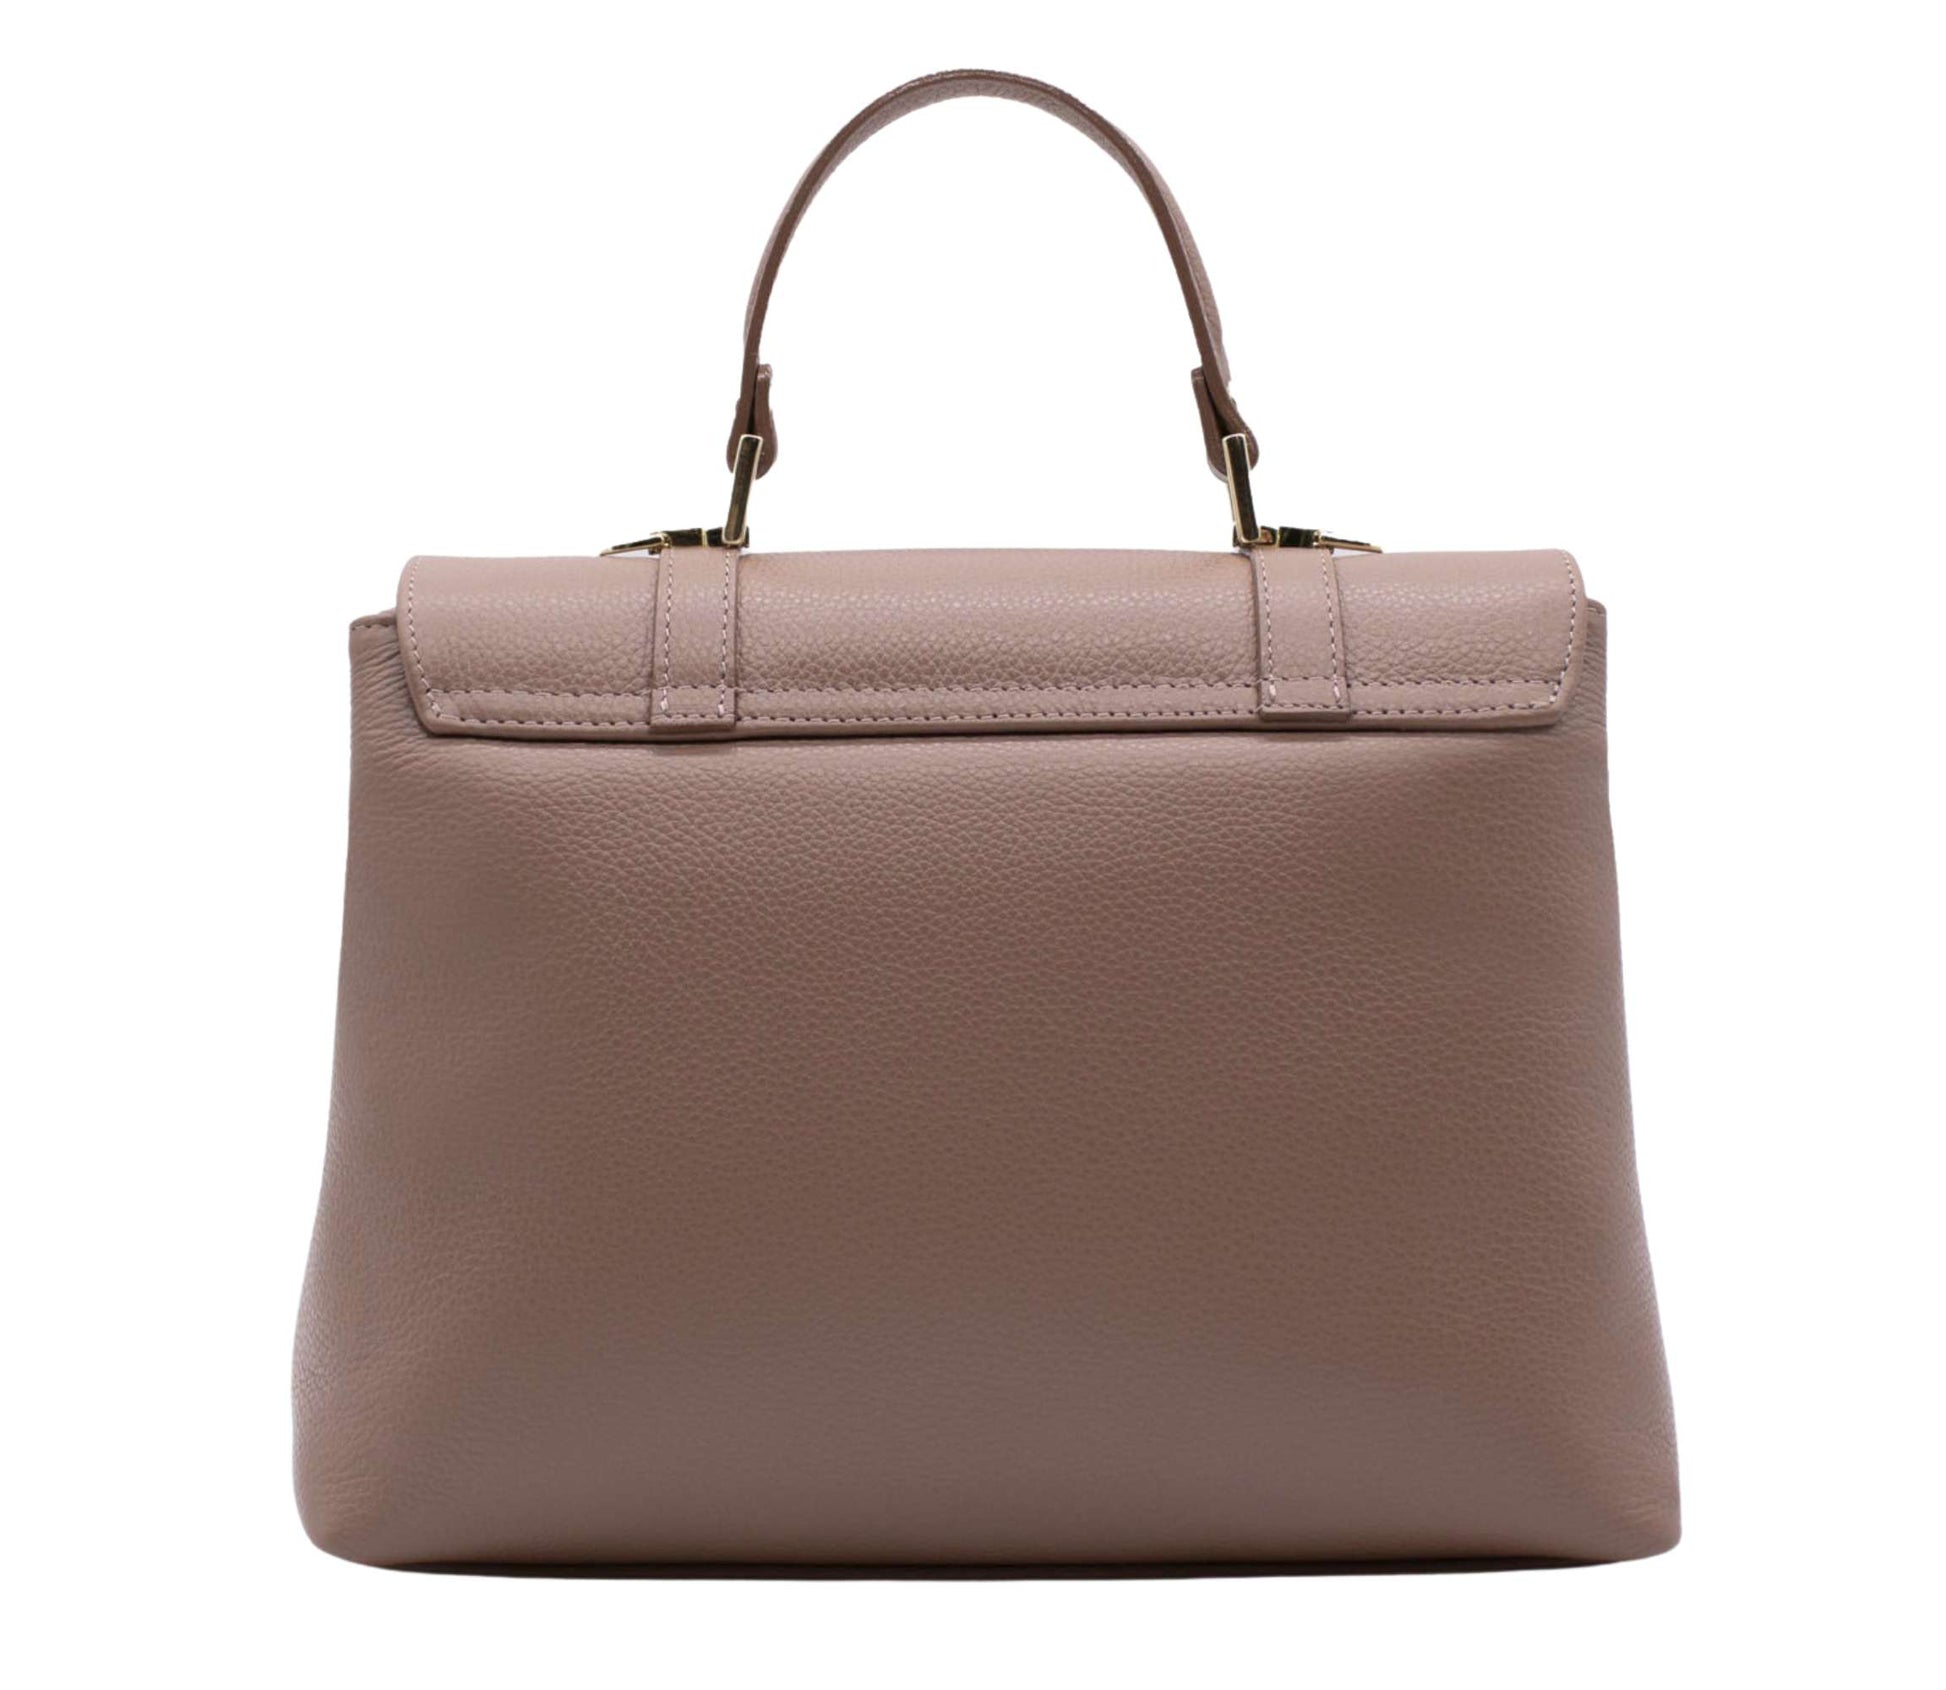 Cavalinho Muse Leather Handbag - Sand - 18300508.07.99_3